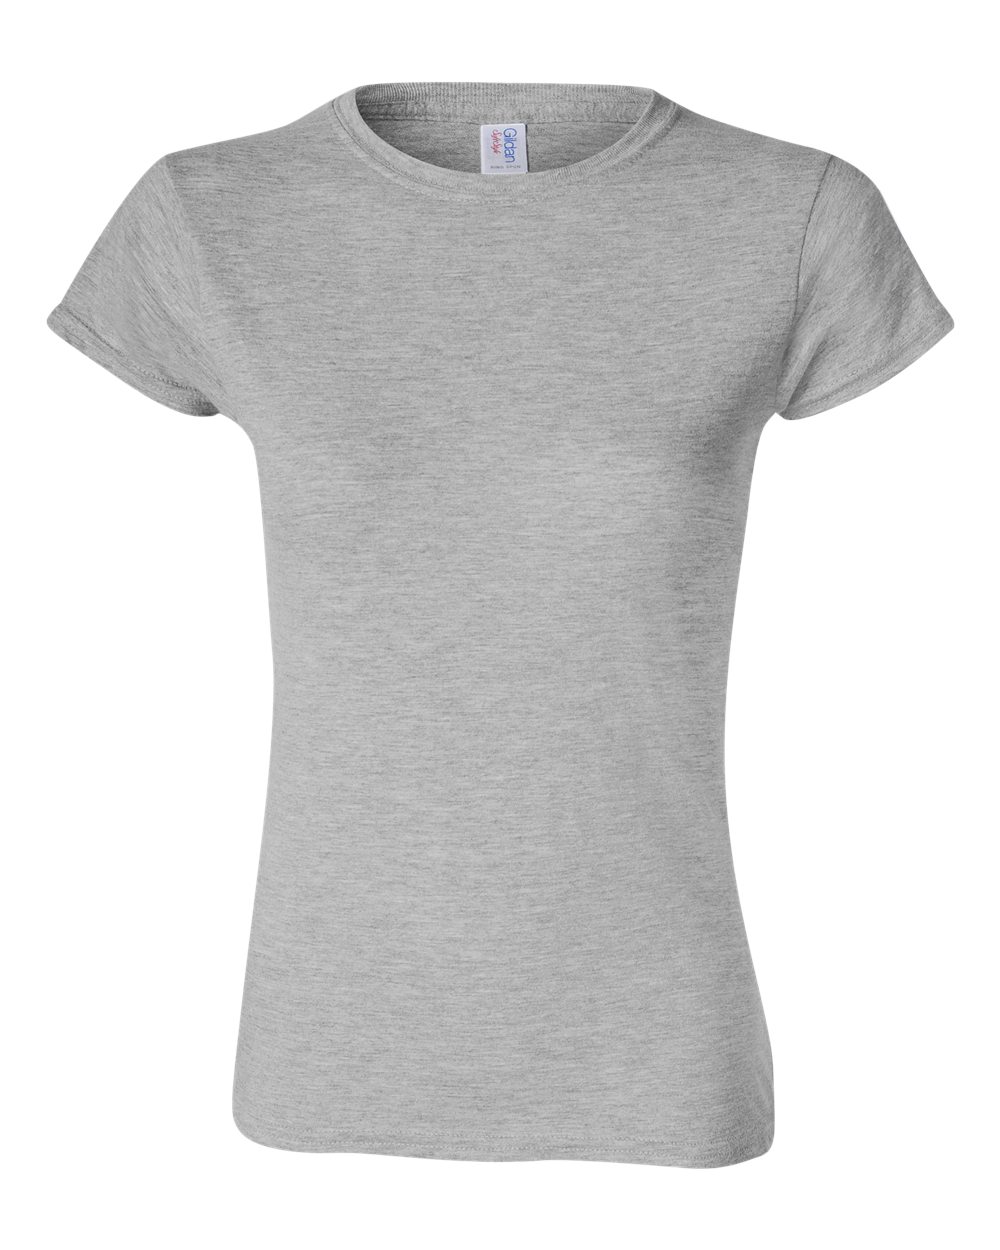 Gildan Softstyle Ladies T-Shirt - 64000L - Sport Grey, S